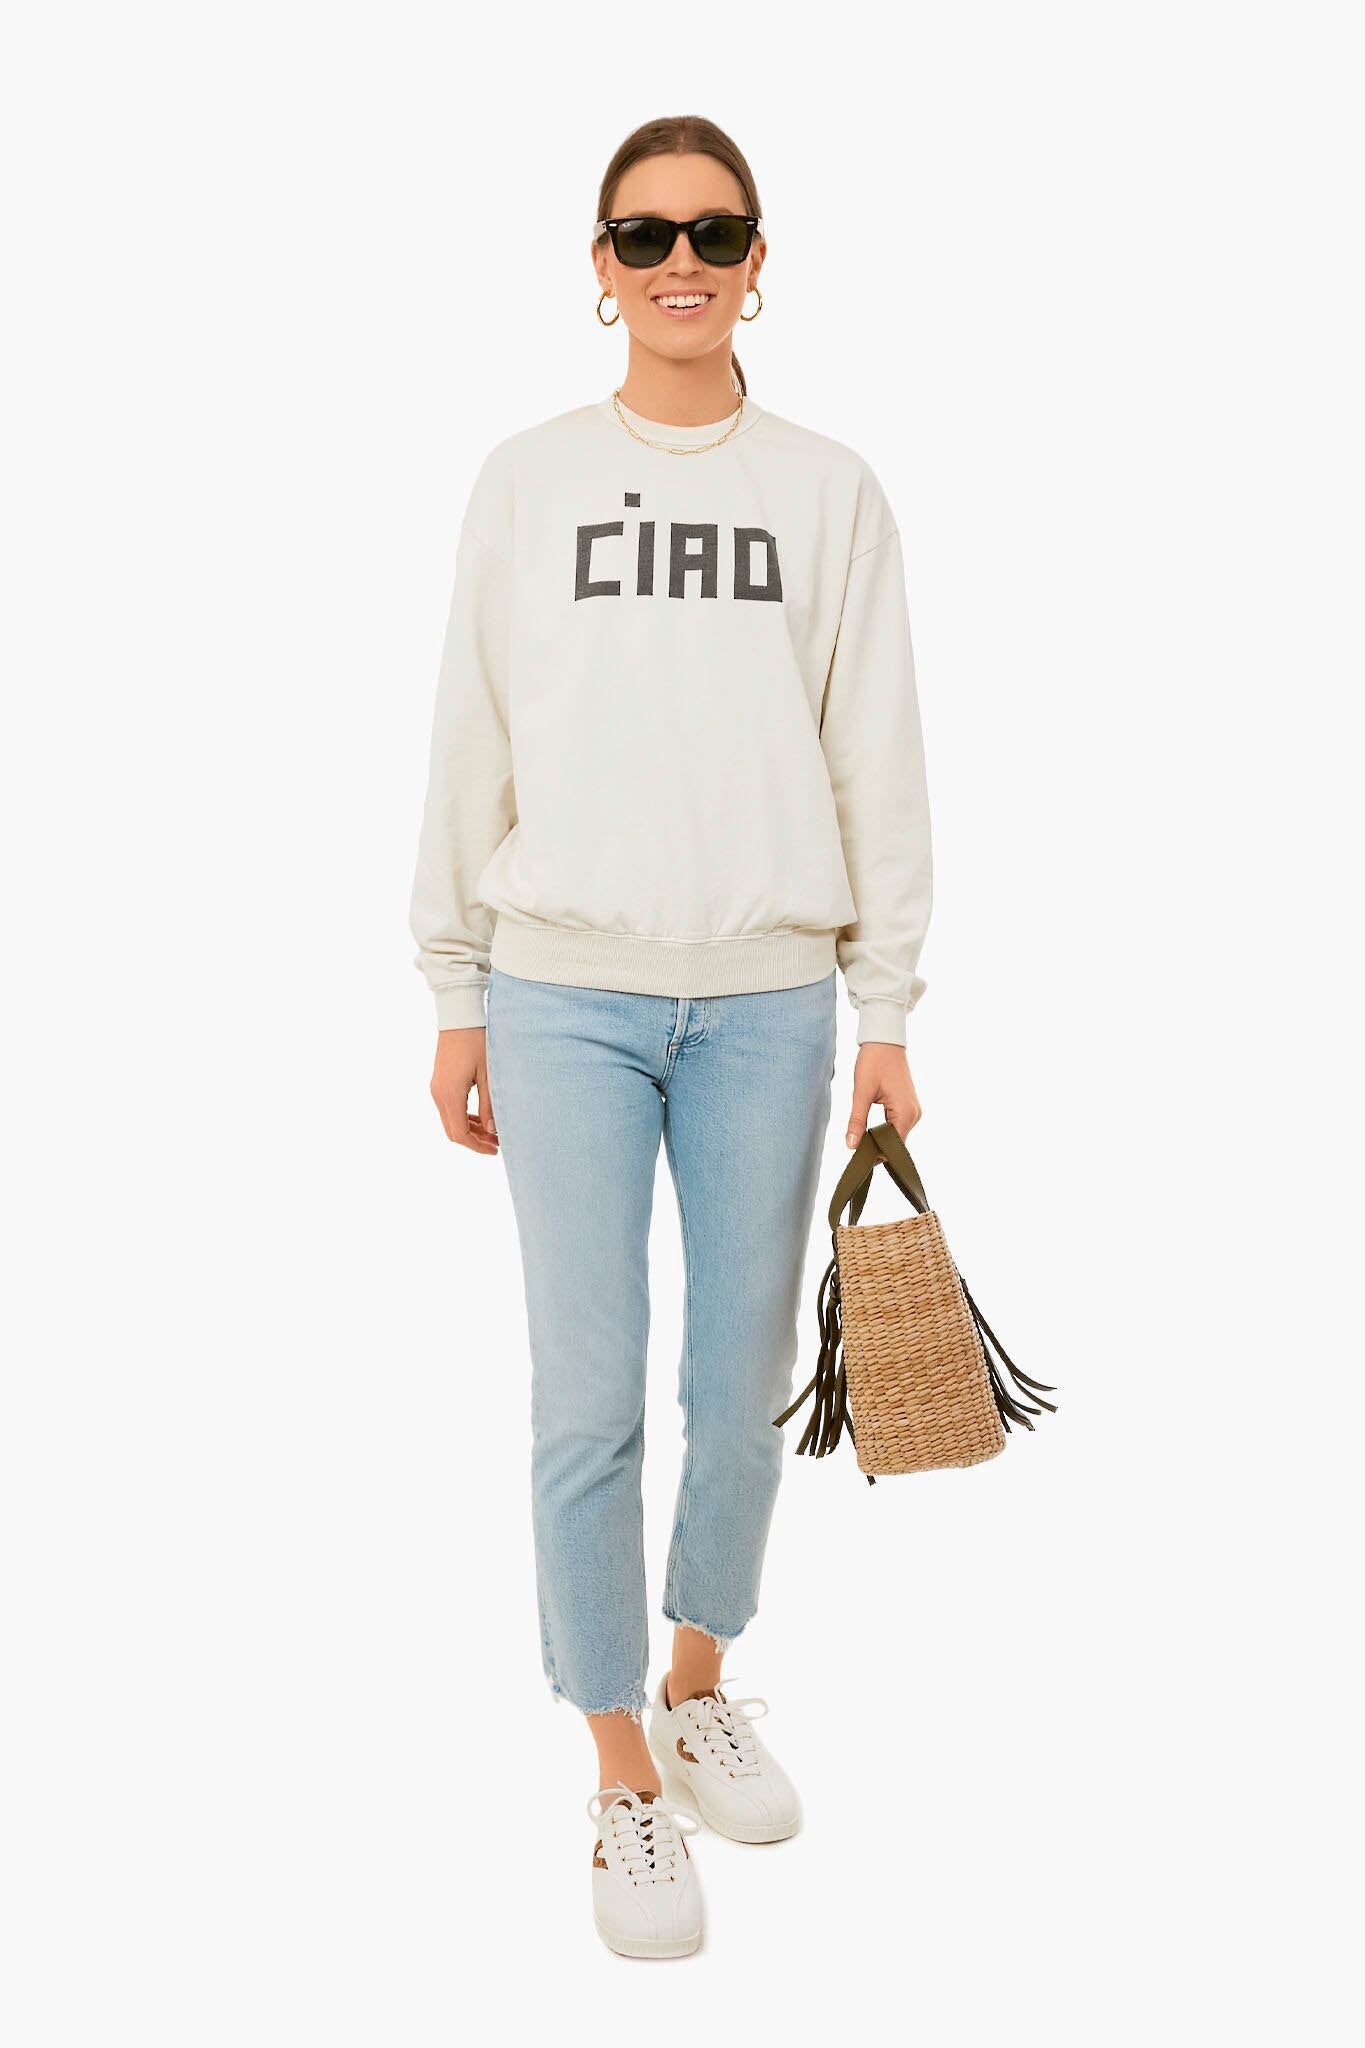 Clare V. Sweatshirt - ShopperBoard